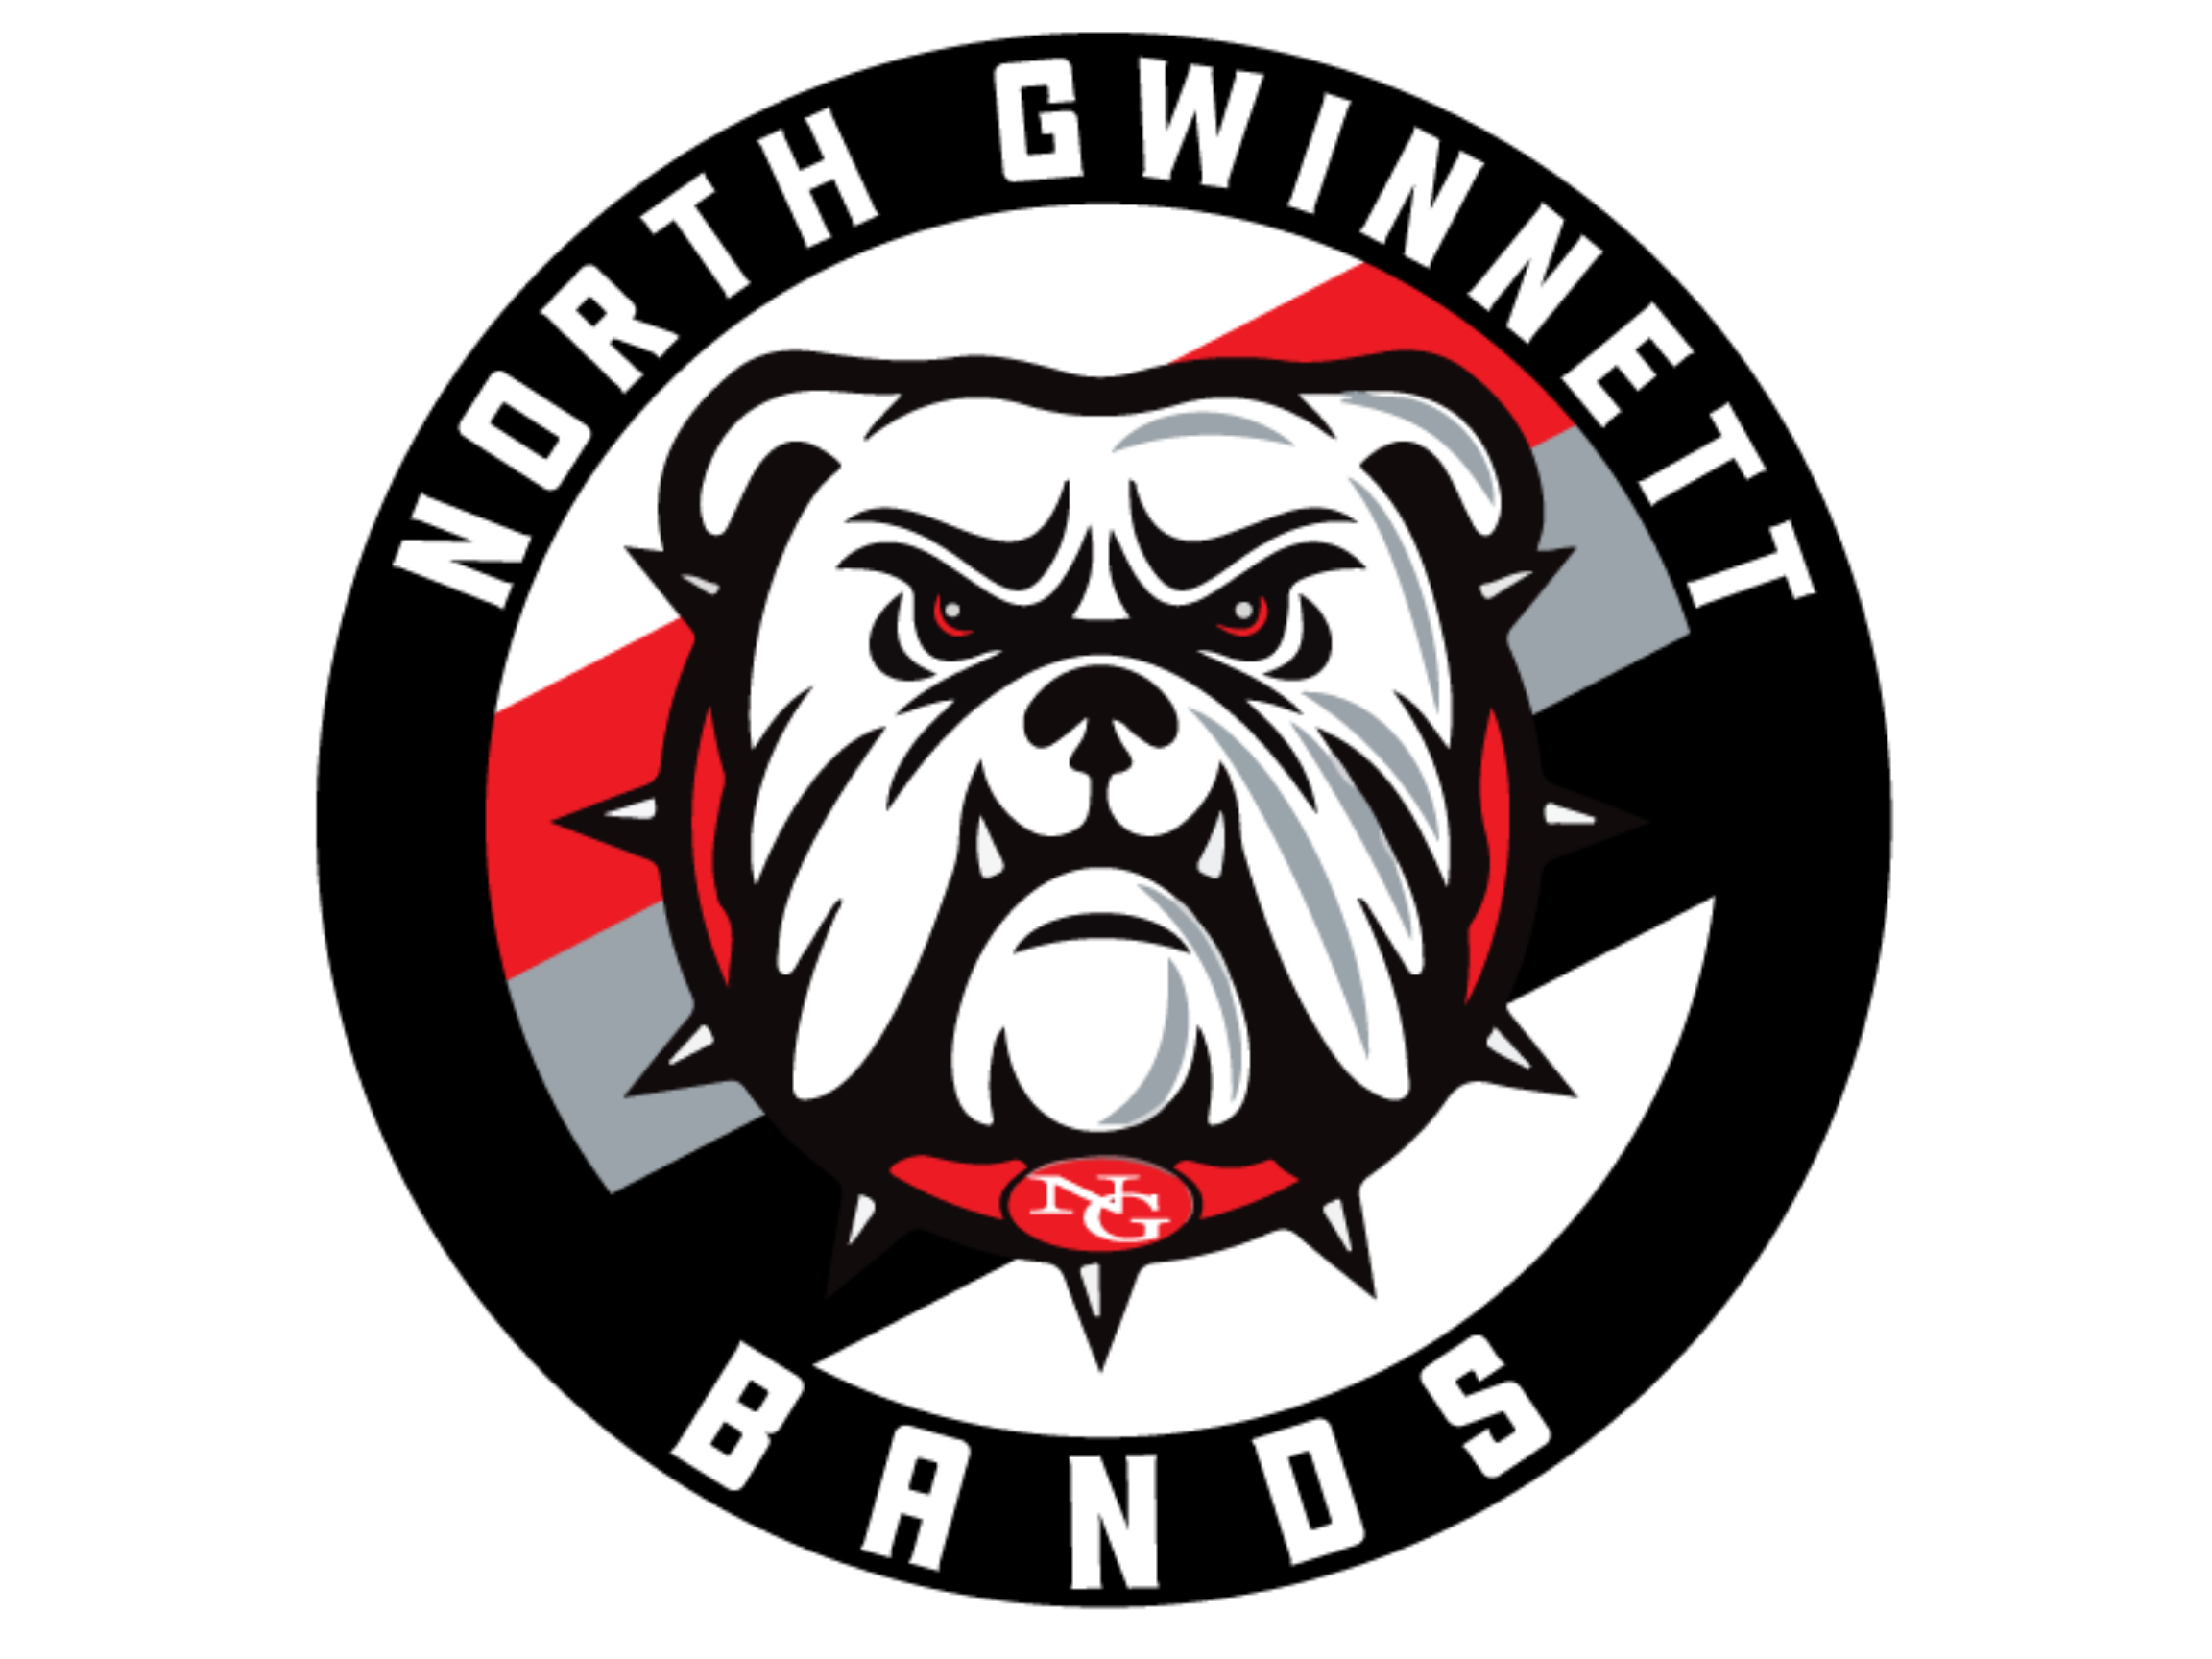 North Gwinnett Bands